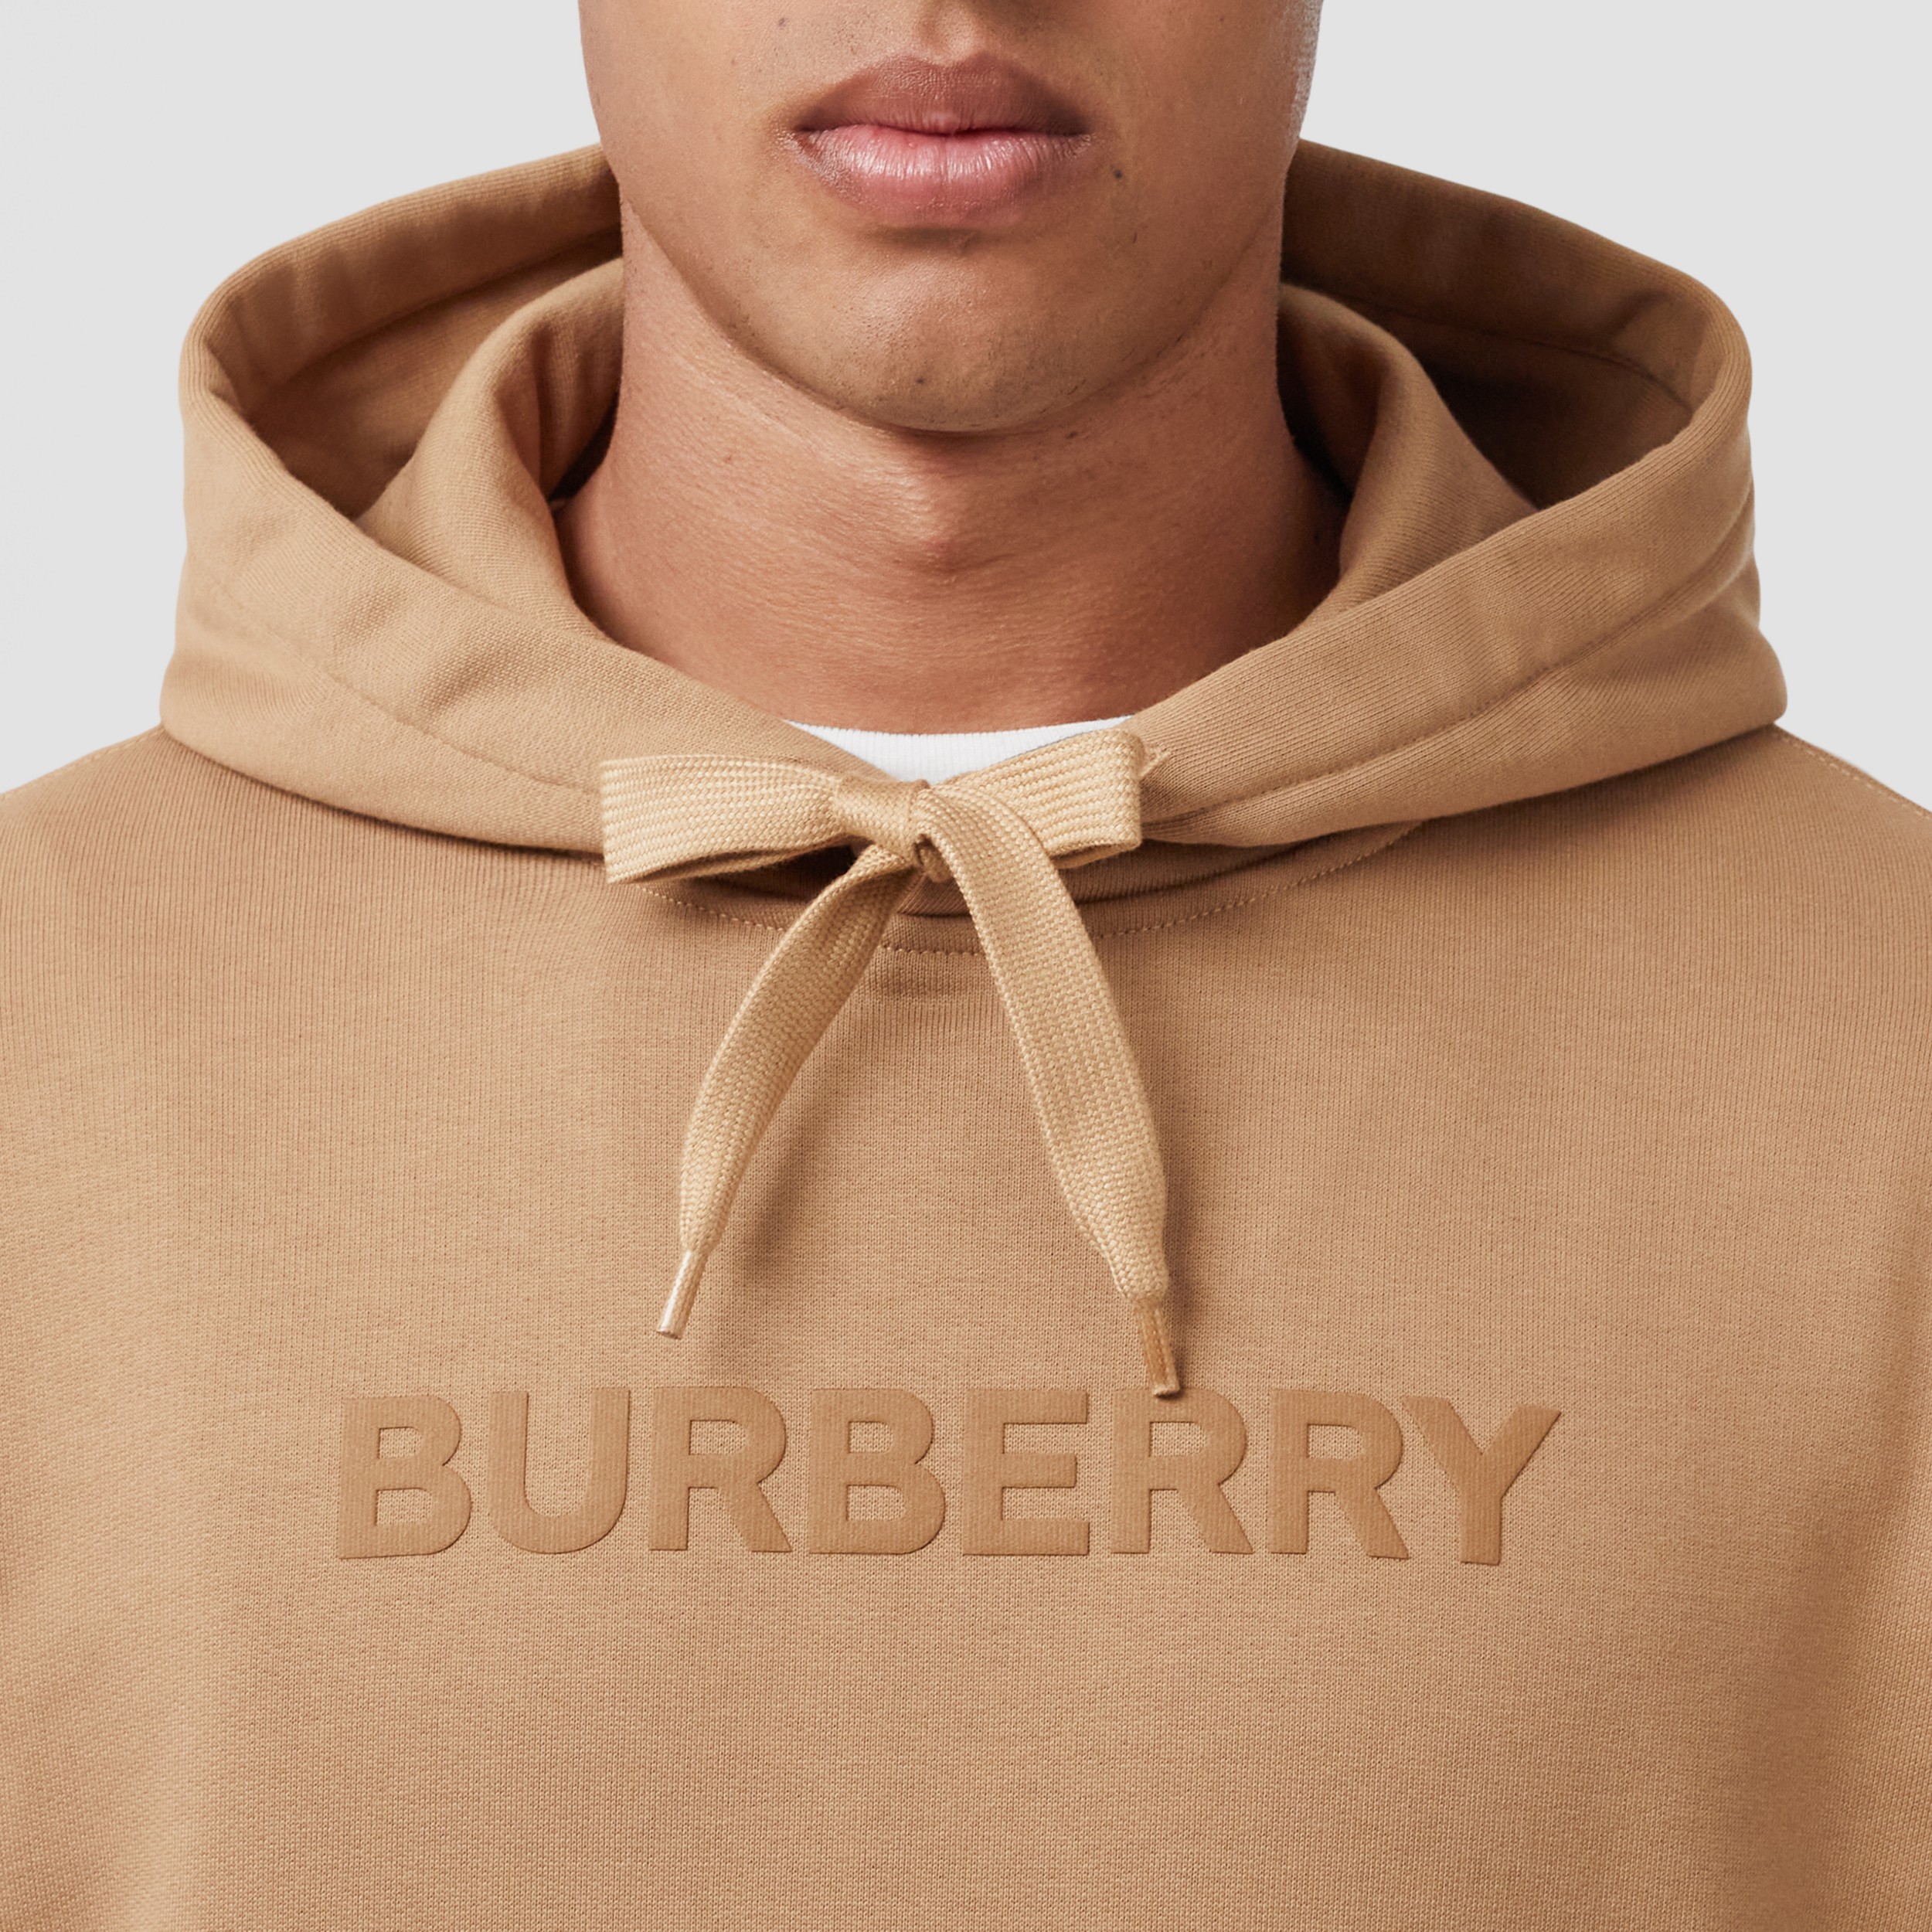 Kapuzenpullover mit Burberry-Logo (Camelfarben) - Herren | Burberry® - 2